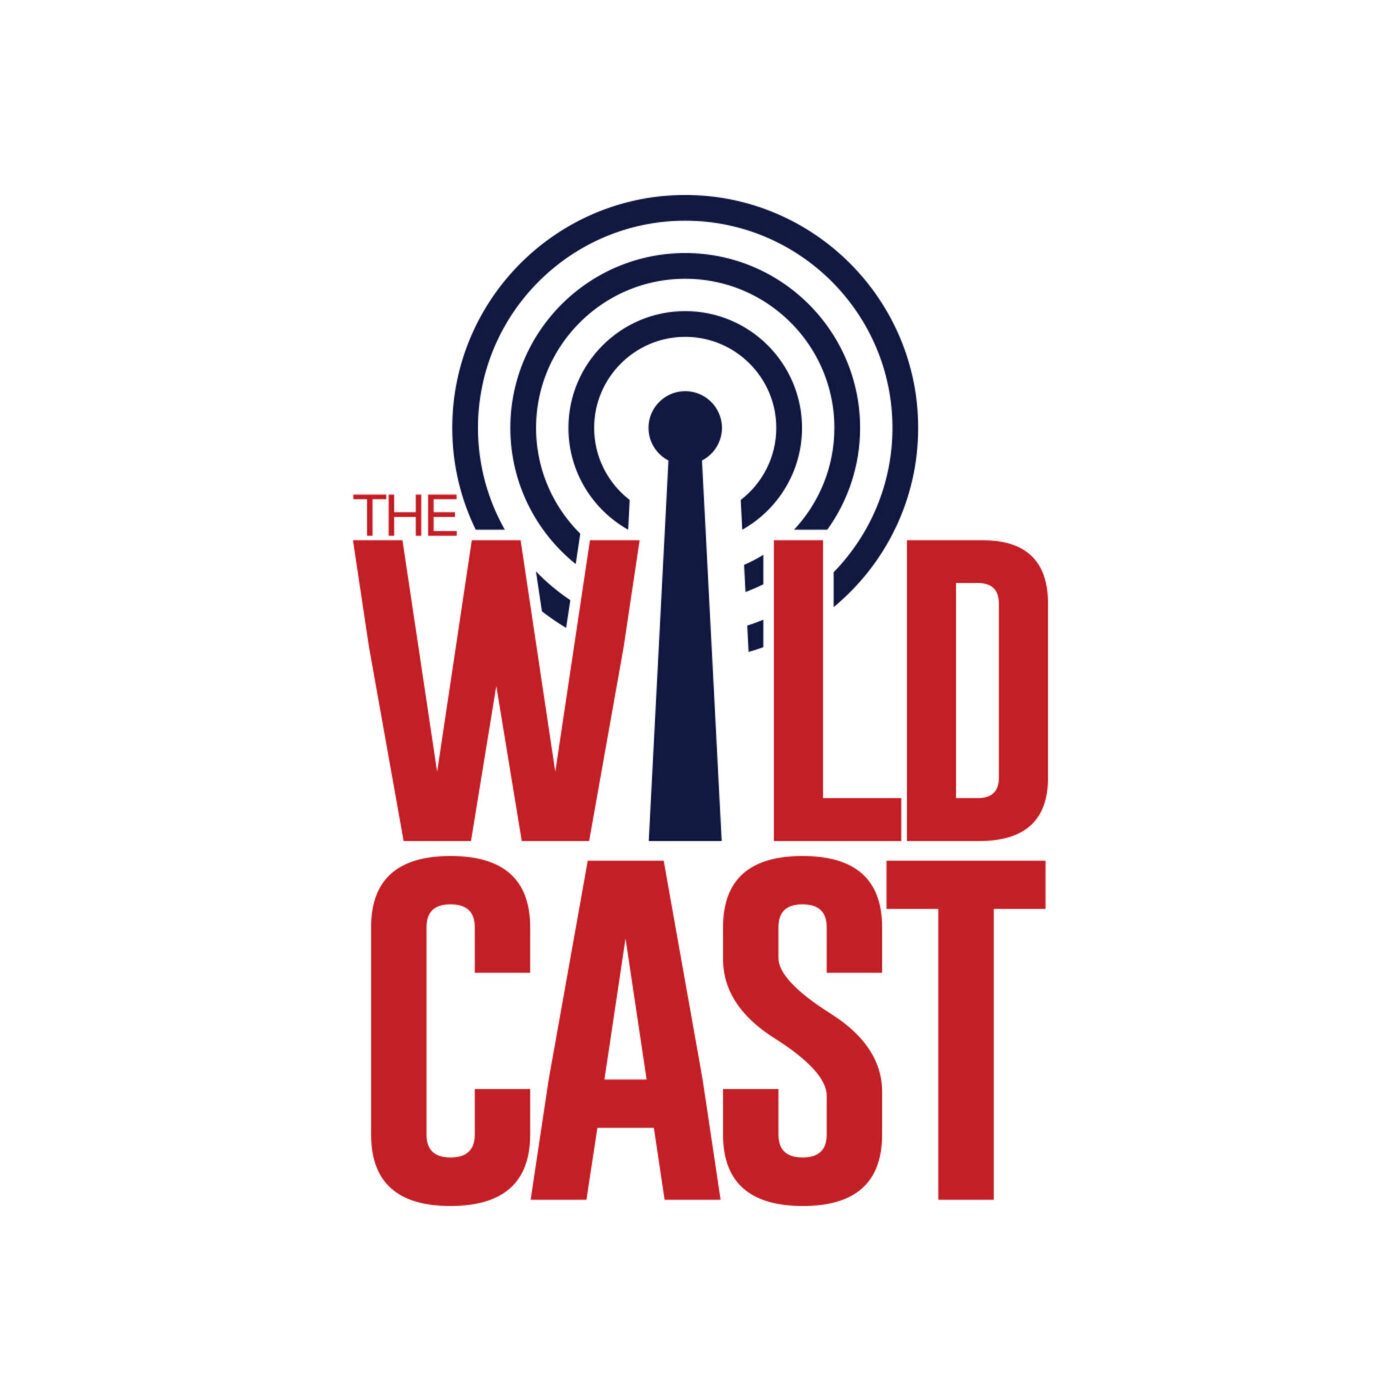 The Wildcast, Episode 415: Does Azuolas Tubelis get enough respect nationally?; UA women host Stanford for primetime showdown